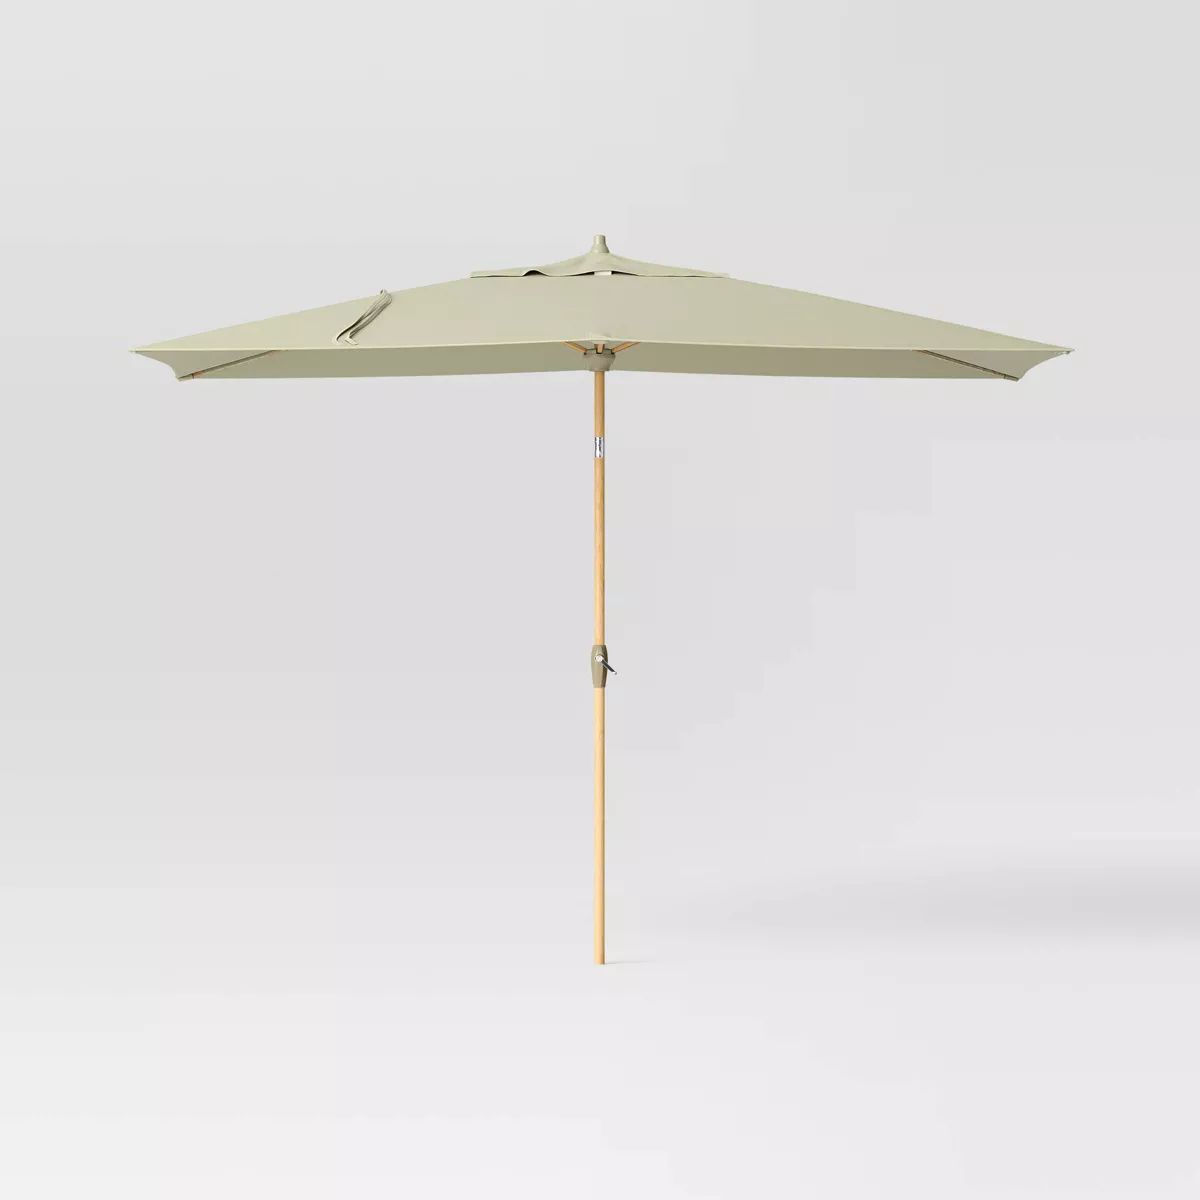 6'x10' Rectangular Outdoor Patio Market Umbrella Sage with Light Wood Pole - Threshold™ | Target